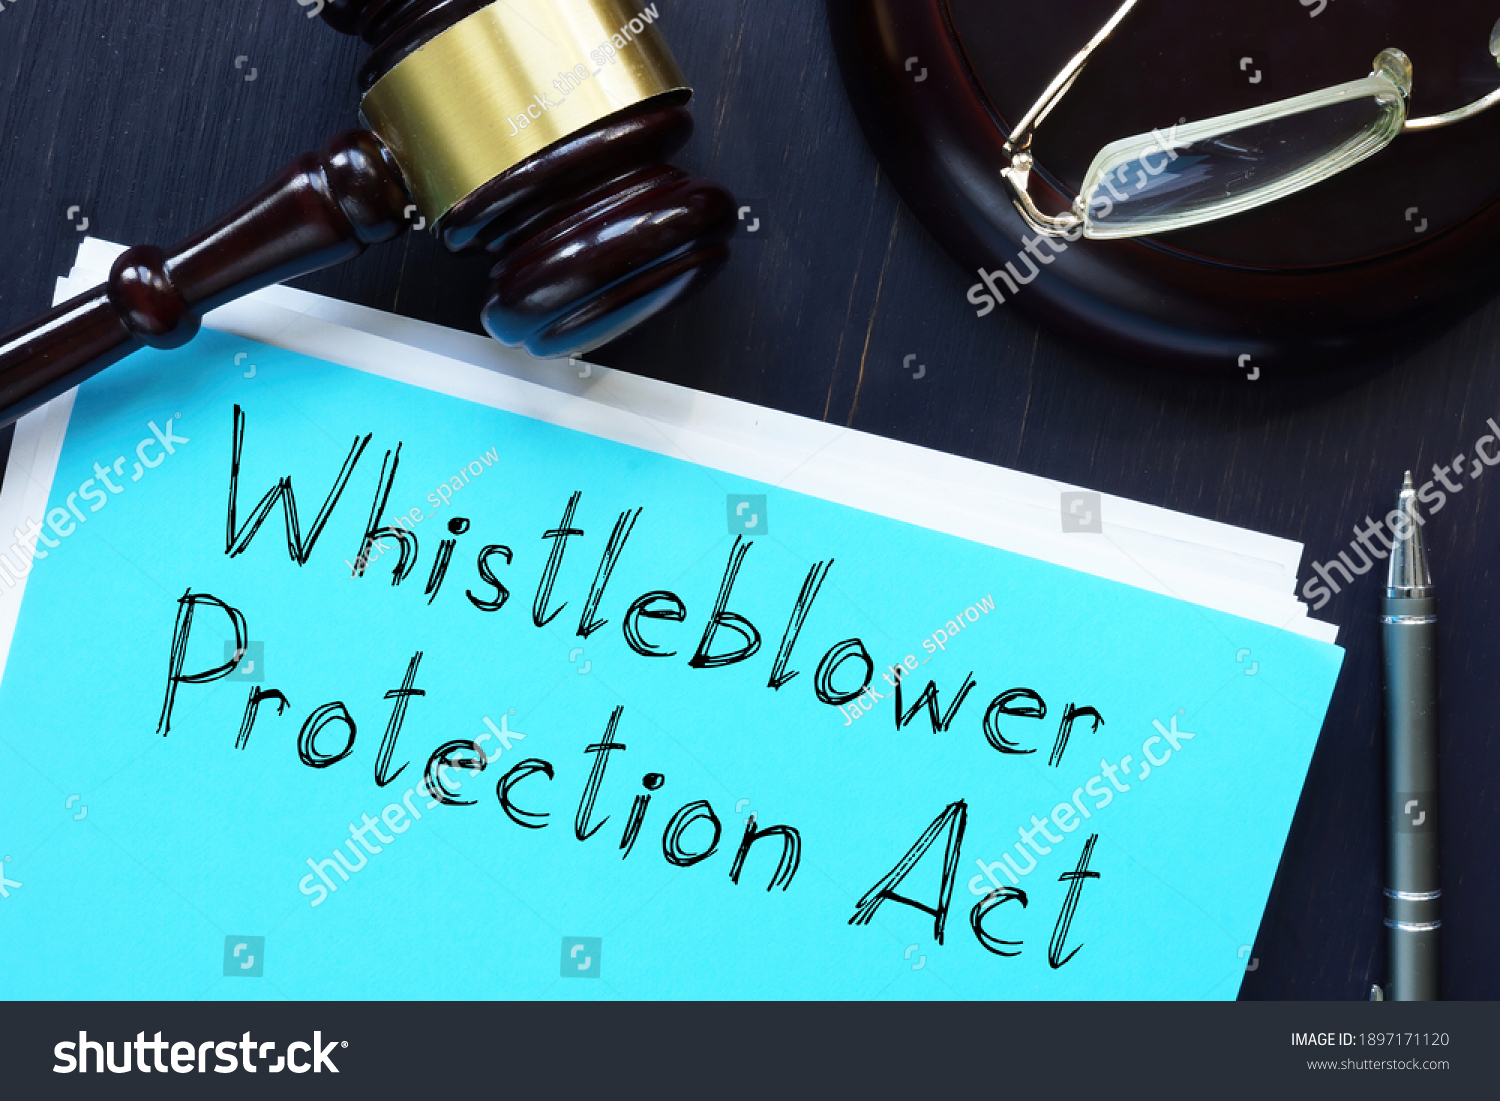 whistleblower protection act, whistleblower law